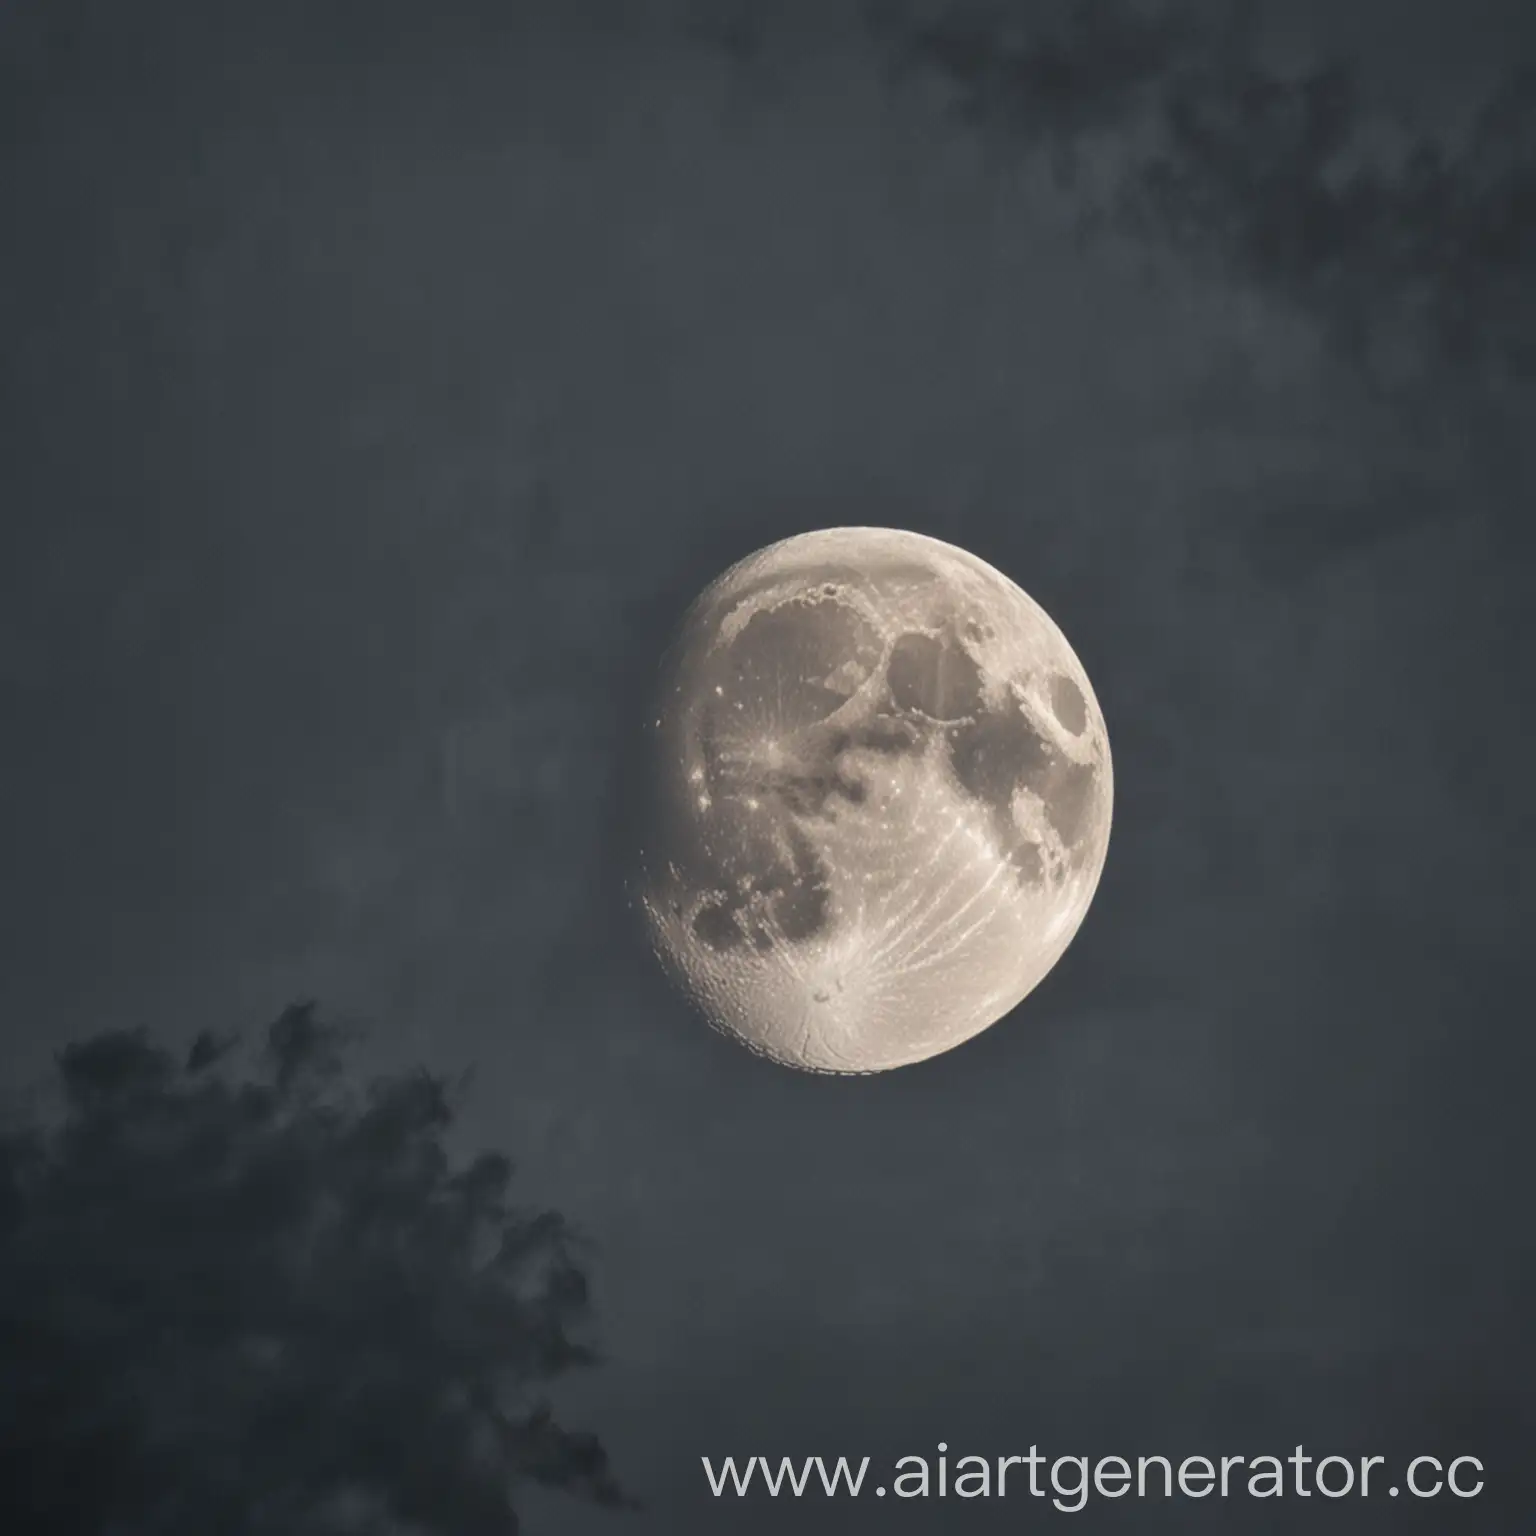 Enchanting-Night-Big-Moon-Illuminating-Dark-Gray-Sky-with-Heavy-Clouds